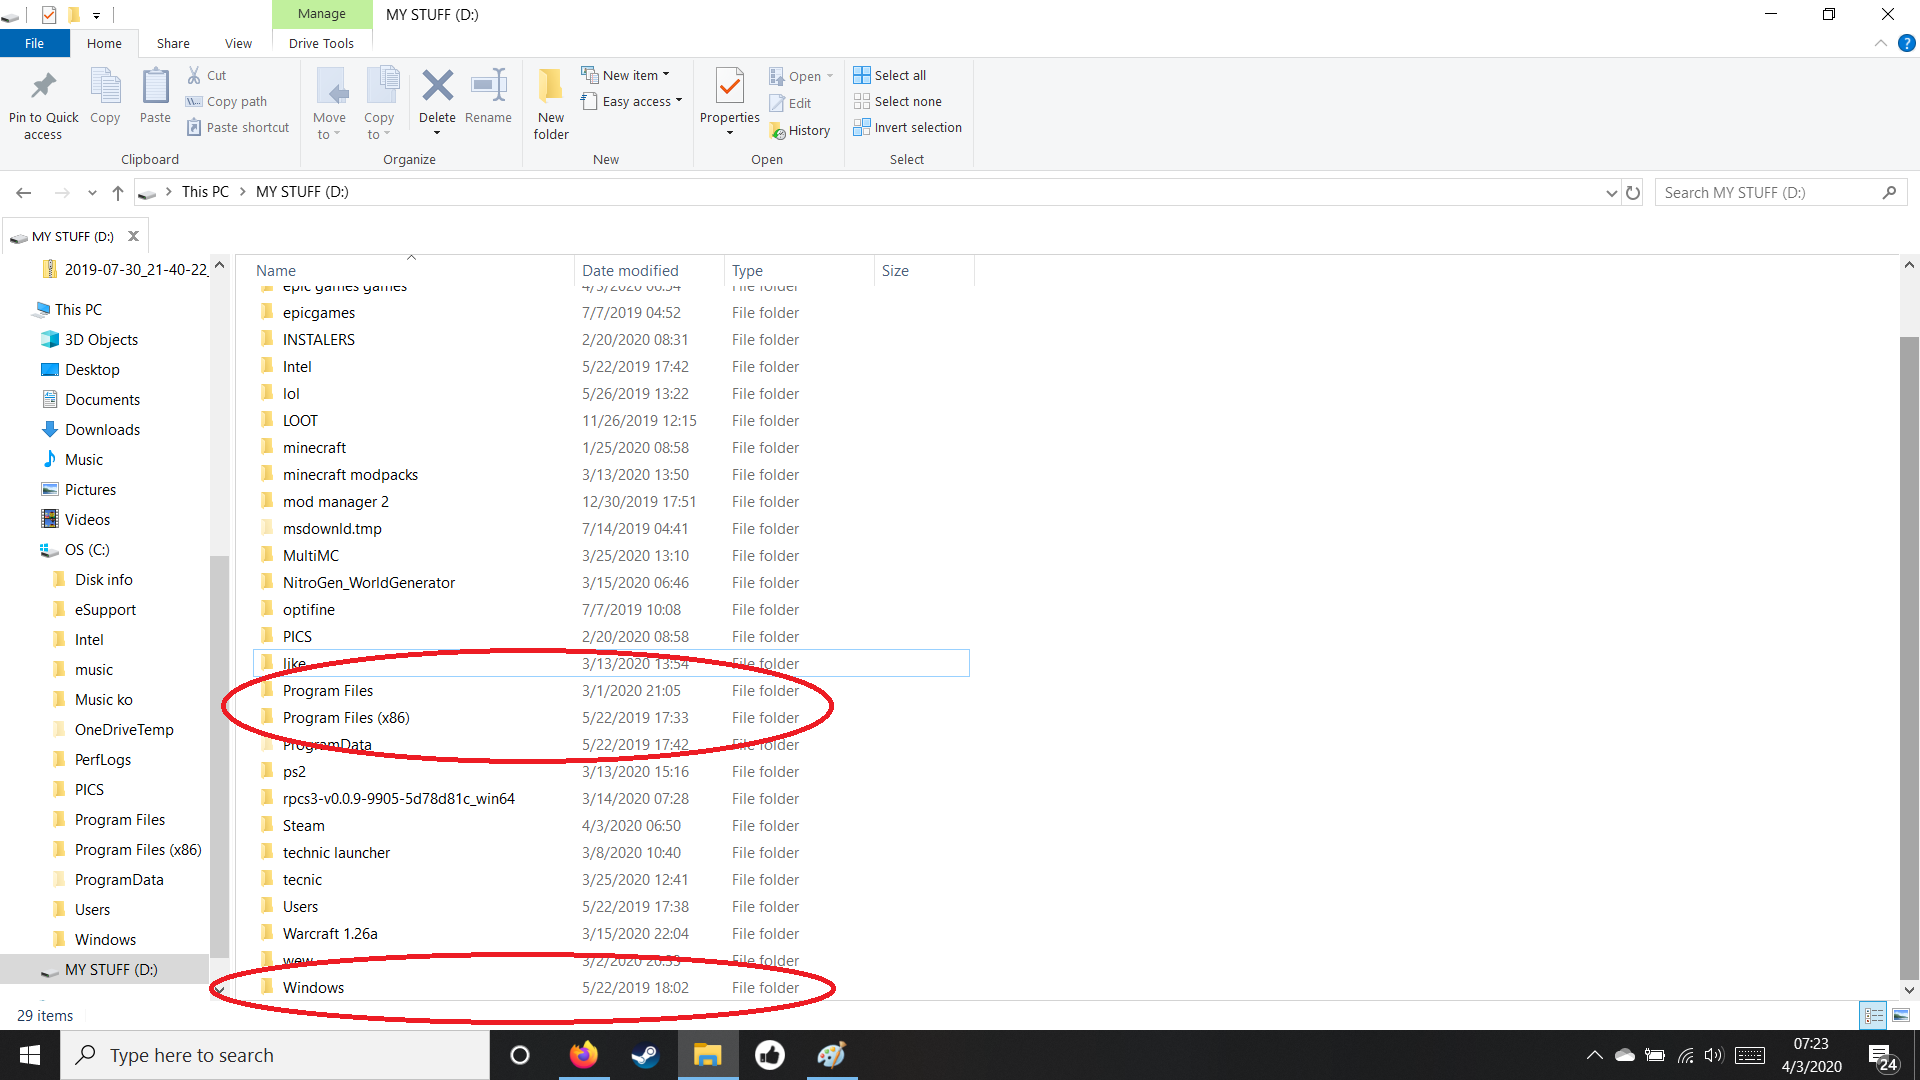 Windows folder in c and d drives 25530740-4595-47c7-8e7c-10e0b8bd5639?upload=true.png